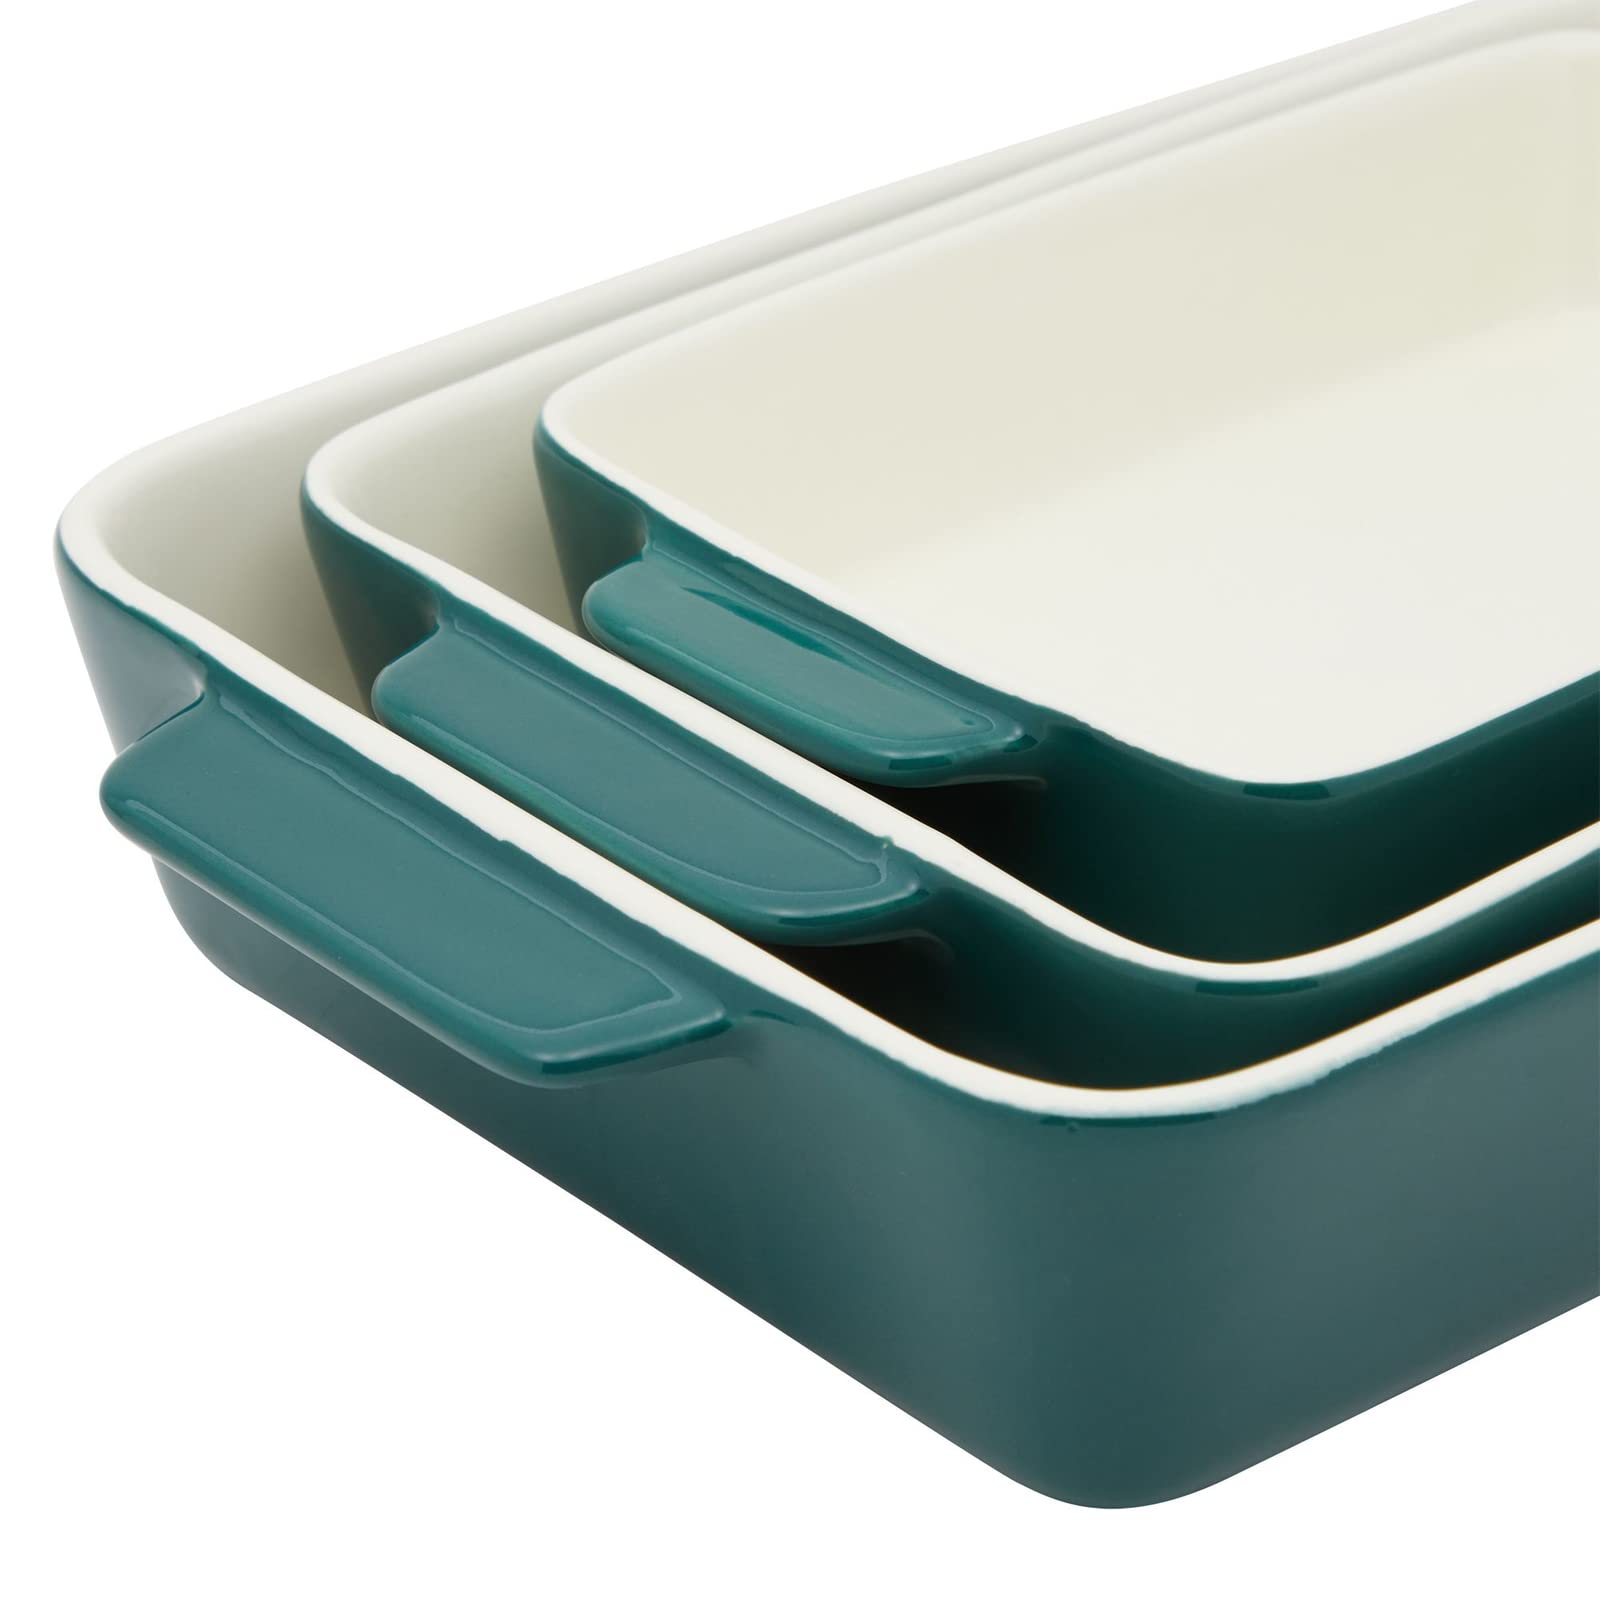 3 Pieces Ceramic Bakeware Set, Porcelain Casserole Dishes for Baking (Green, 3 Rectangular Sizes)